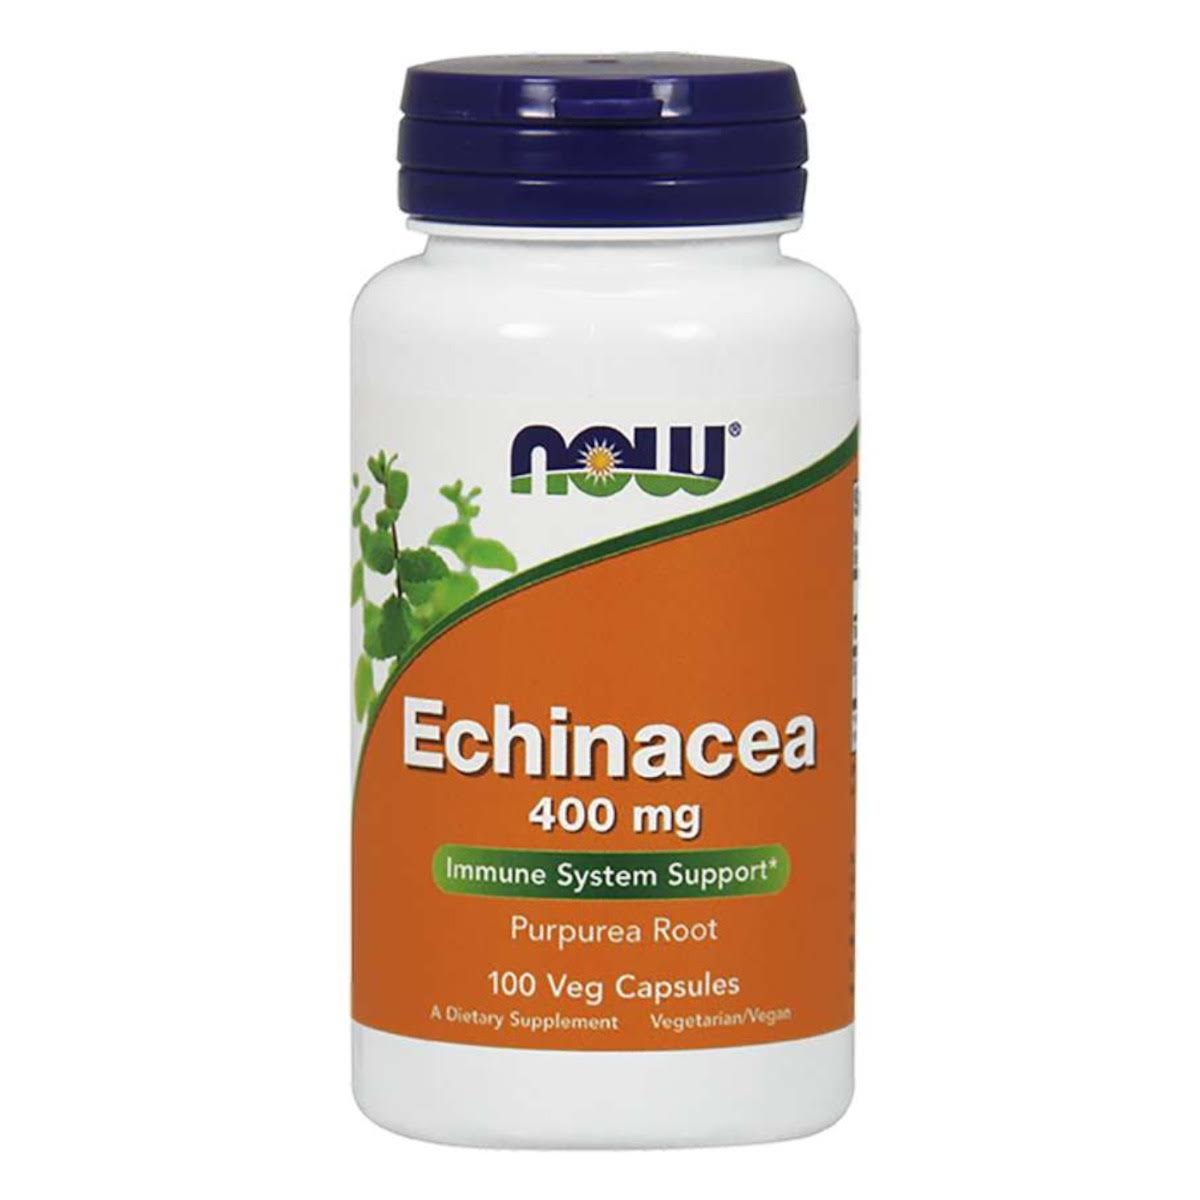 Now Foods Echinacea Purpurea Root - 400mg, 100 Capsules